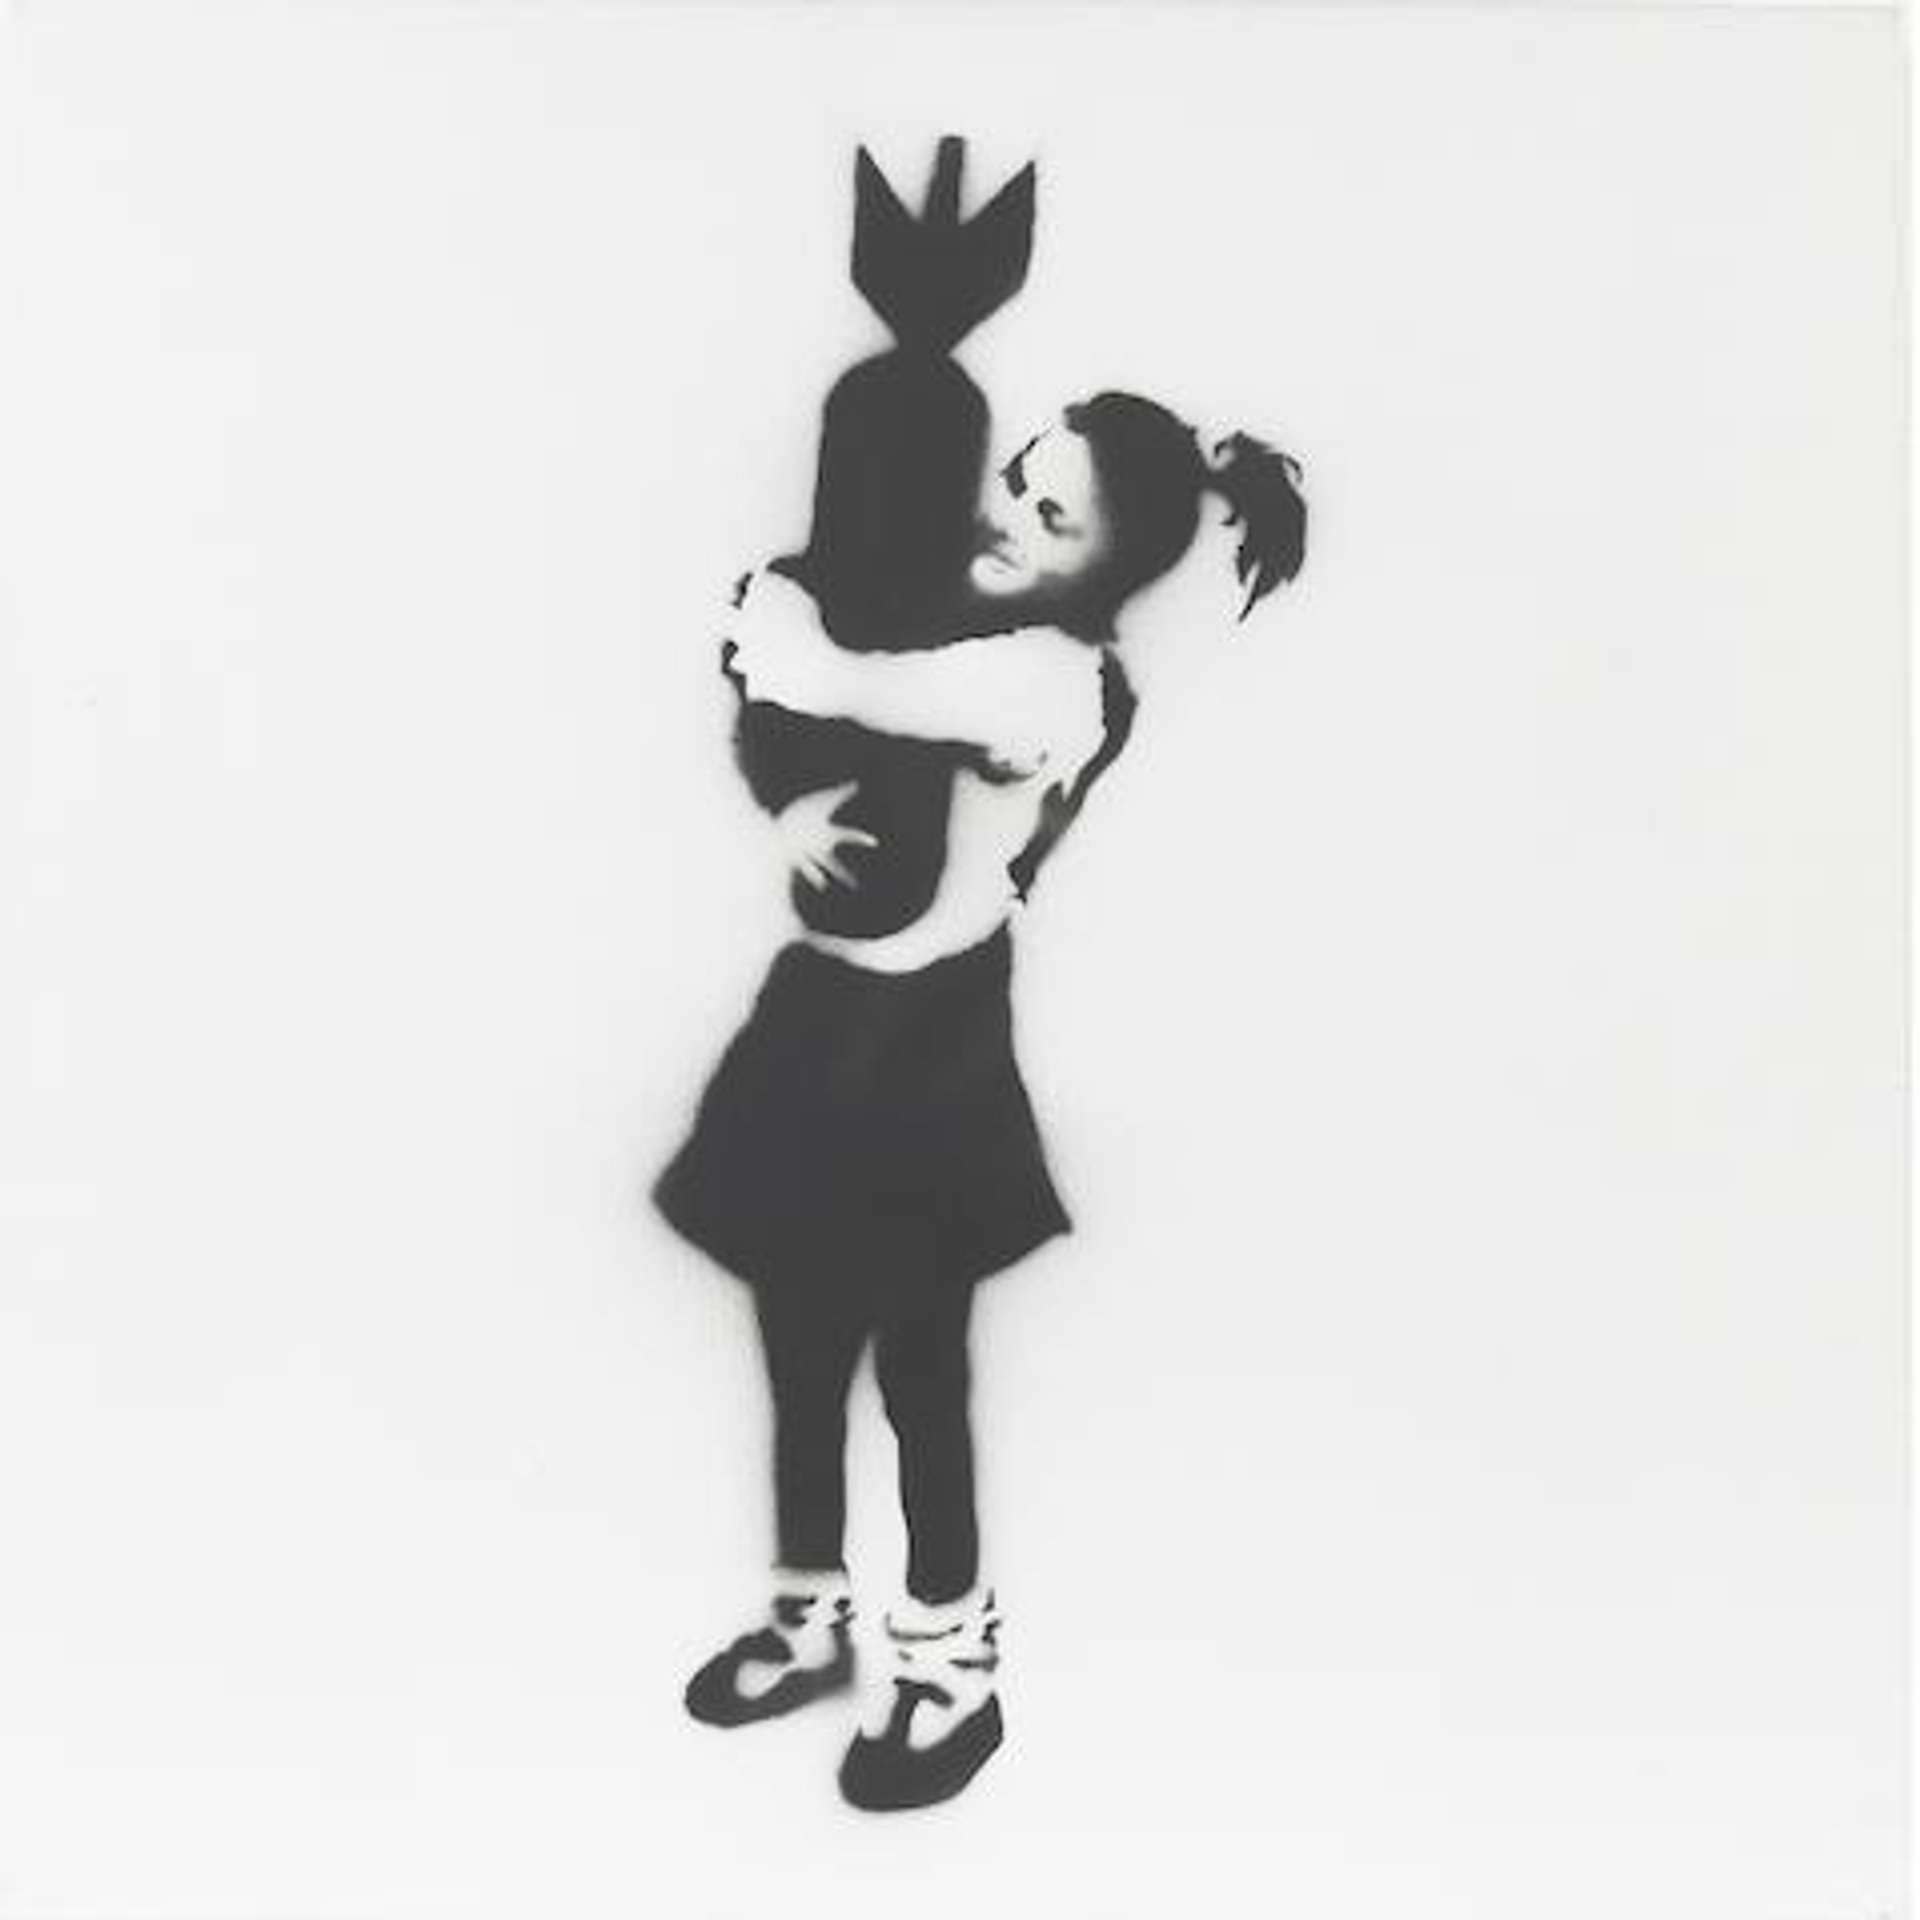 Bomb Hugger by Banksy